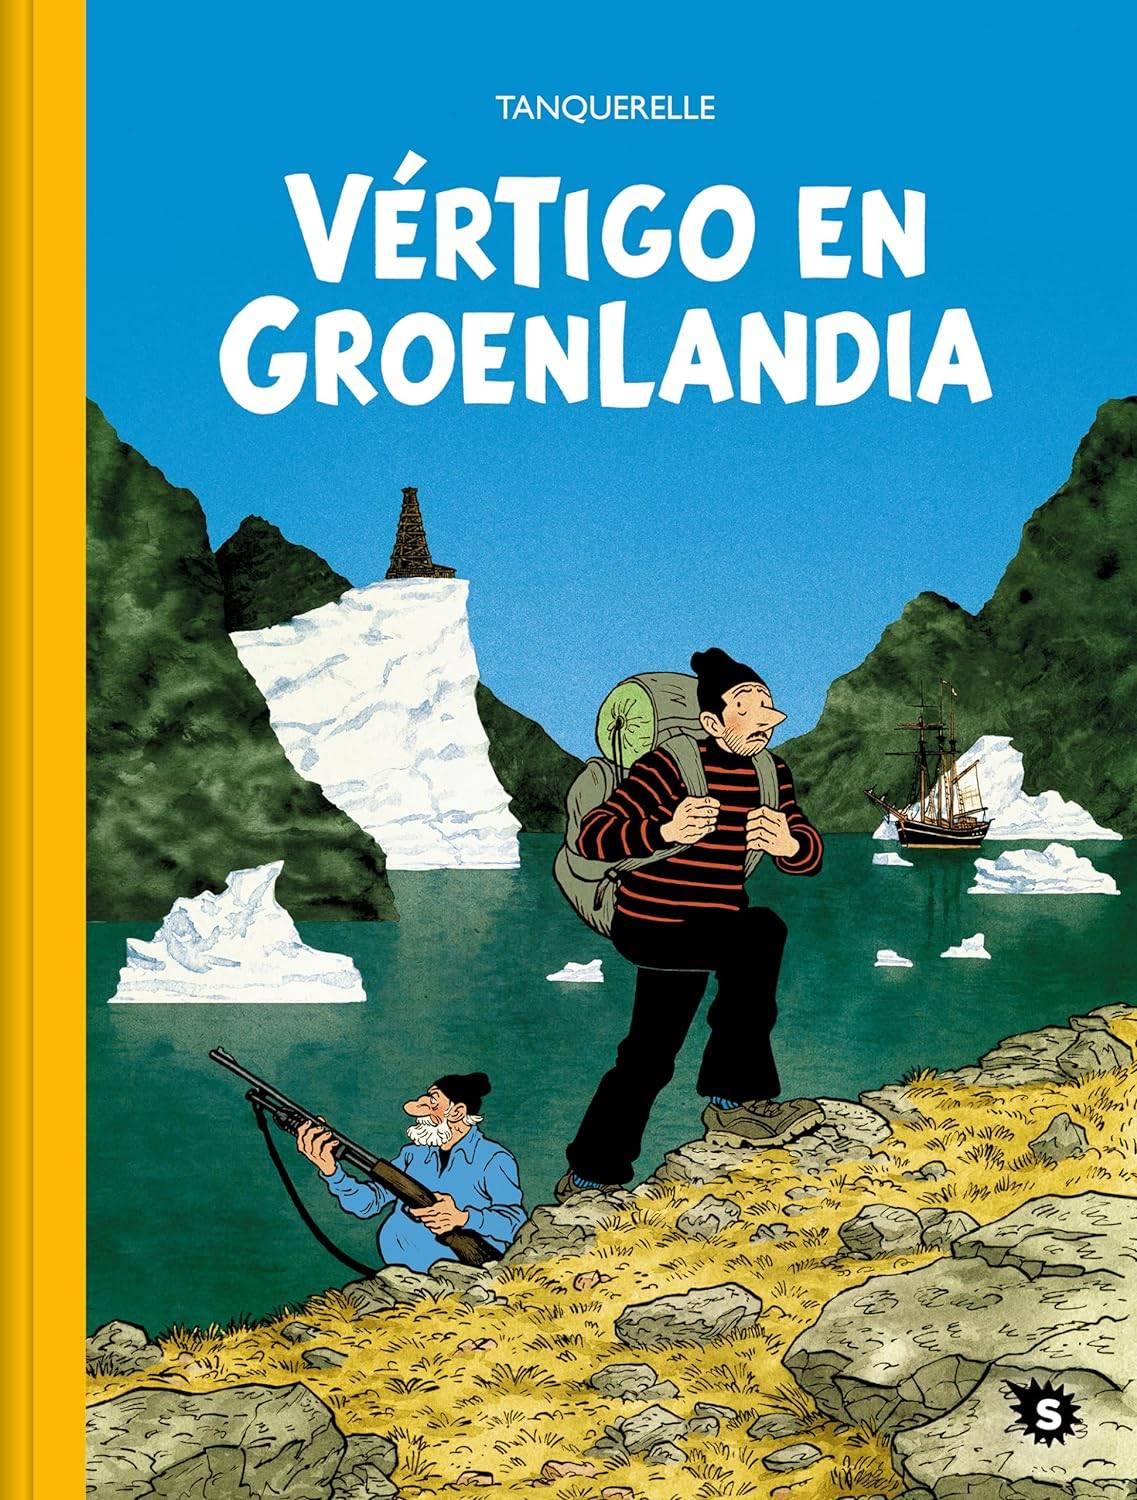 “Vértigo en Groenlandia”, una novela gráfica de Hervé Tanquerelle que te llevará a un viaje visual único